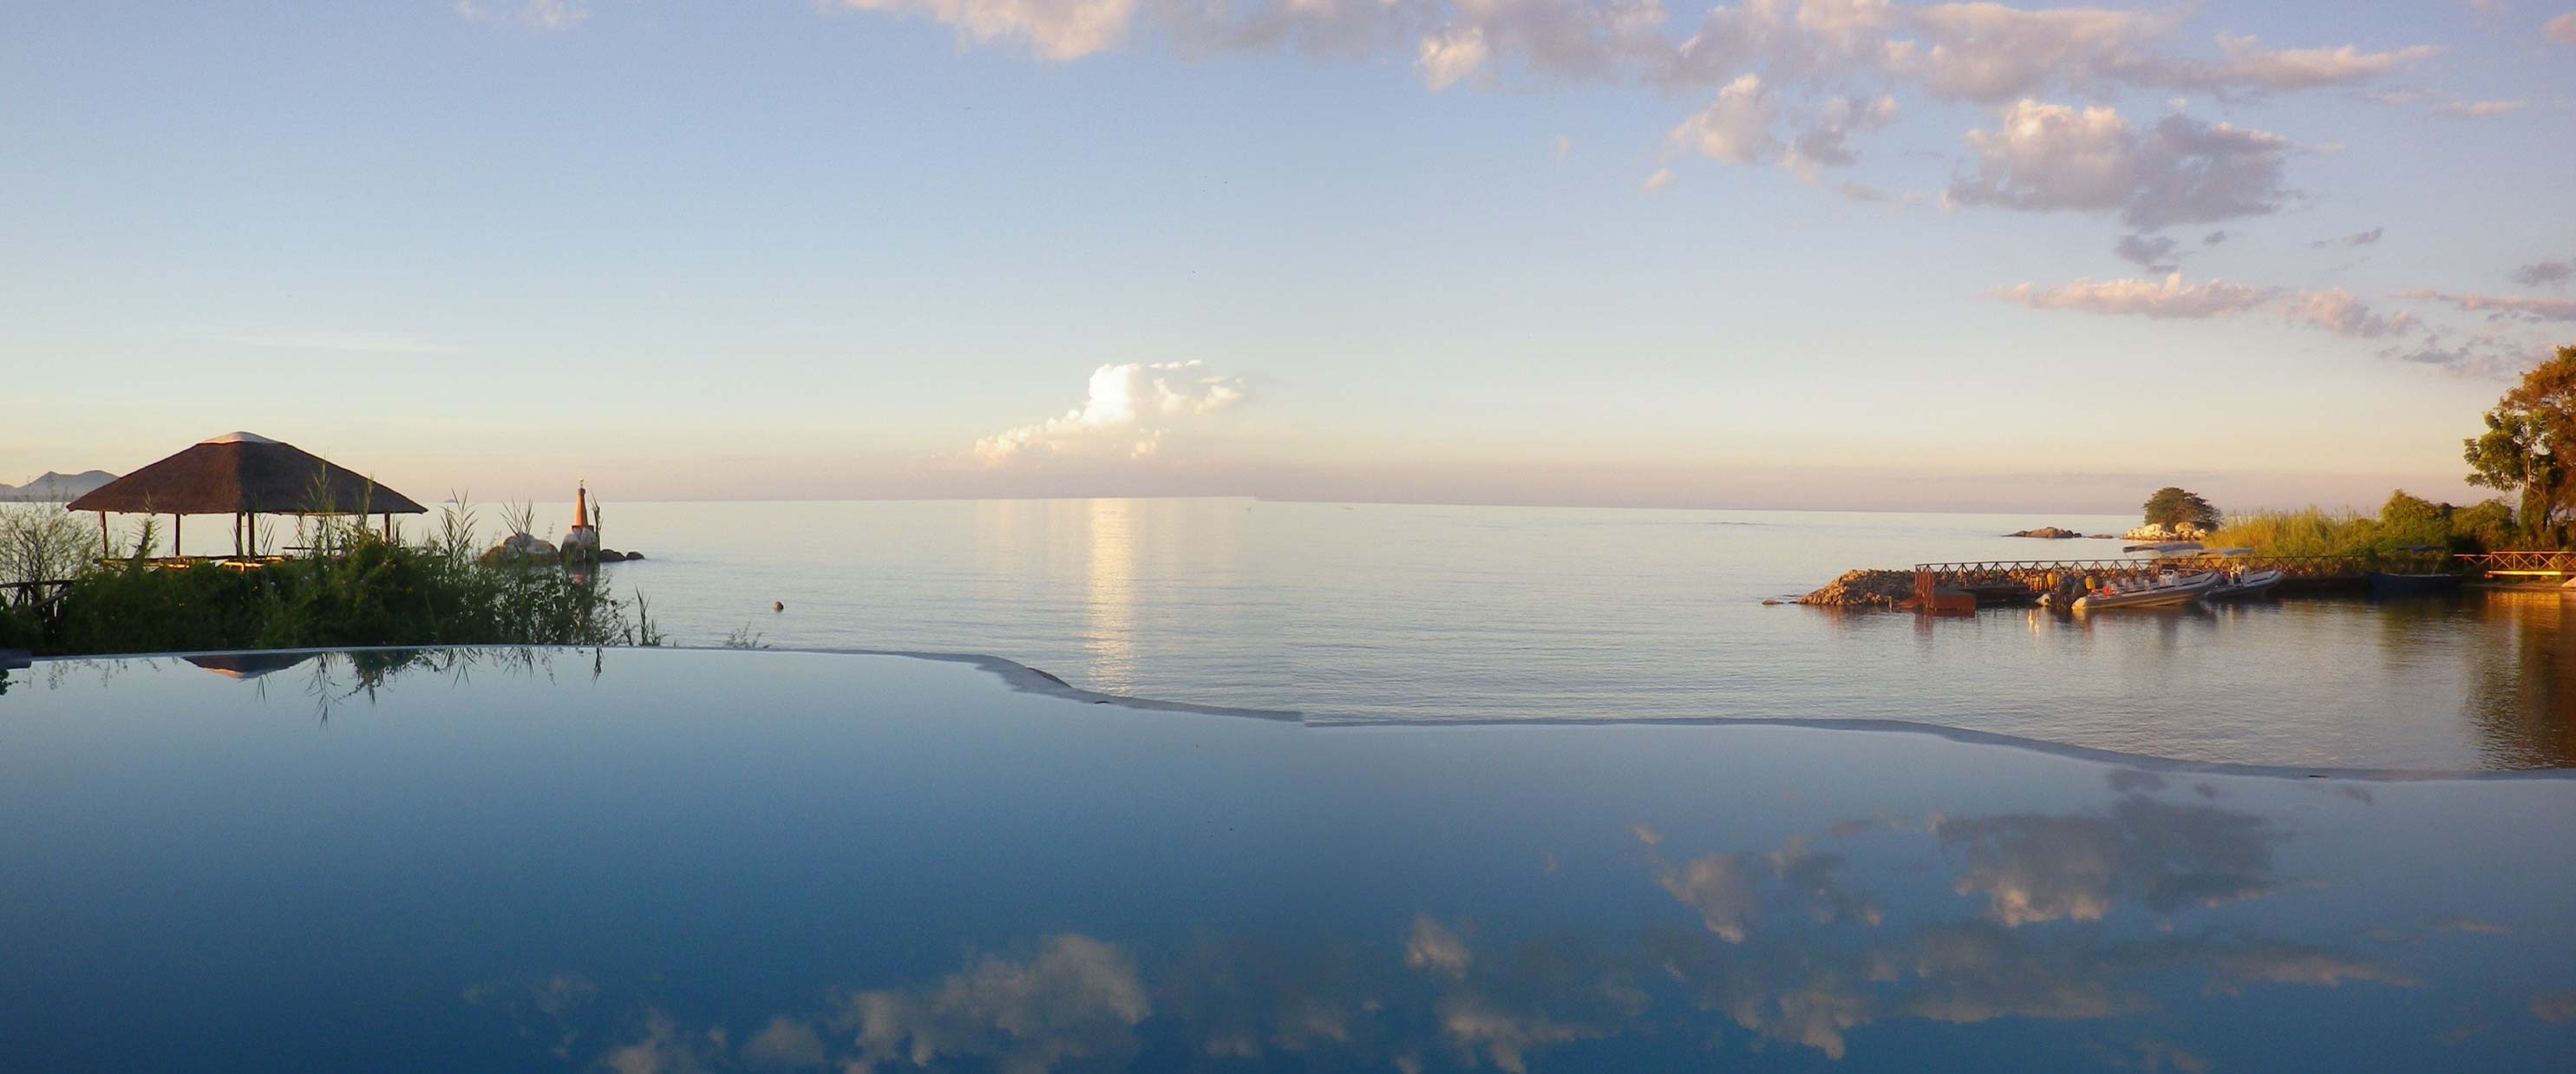 Lake Malawi (Travels), Lake Malawi, African nature, Water beauty, 2970x1240 Dual Screen Desktop